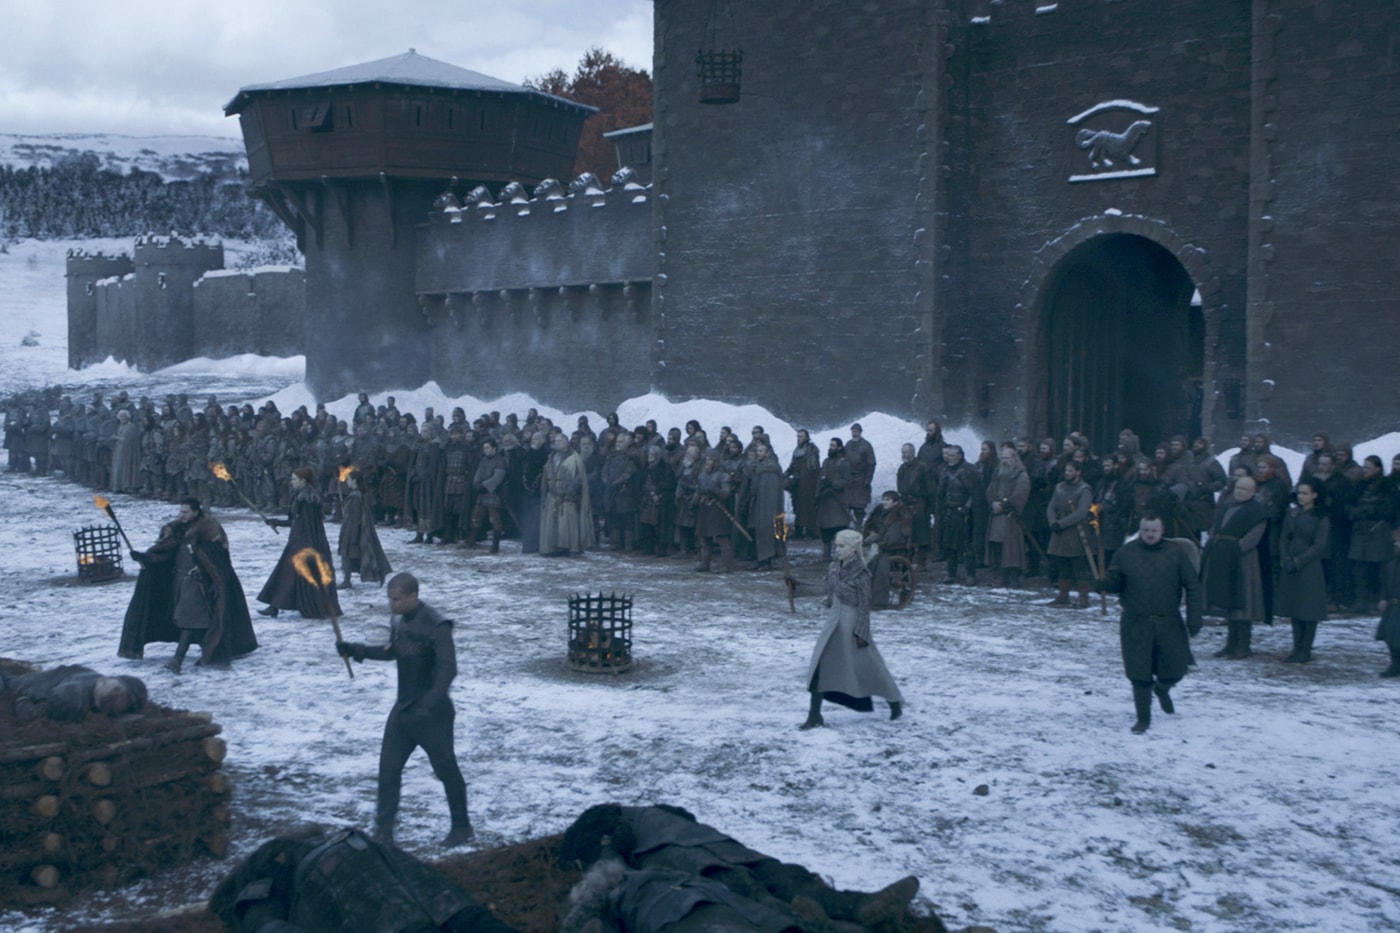 Game of Thrones Season 8 Episode 4 Sneak Peek Daenerys fleet Dany and Drogon mass funeral at Winterfell Cersei Euron